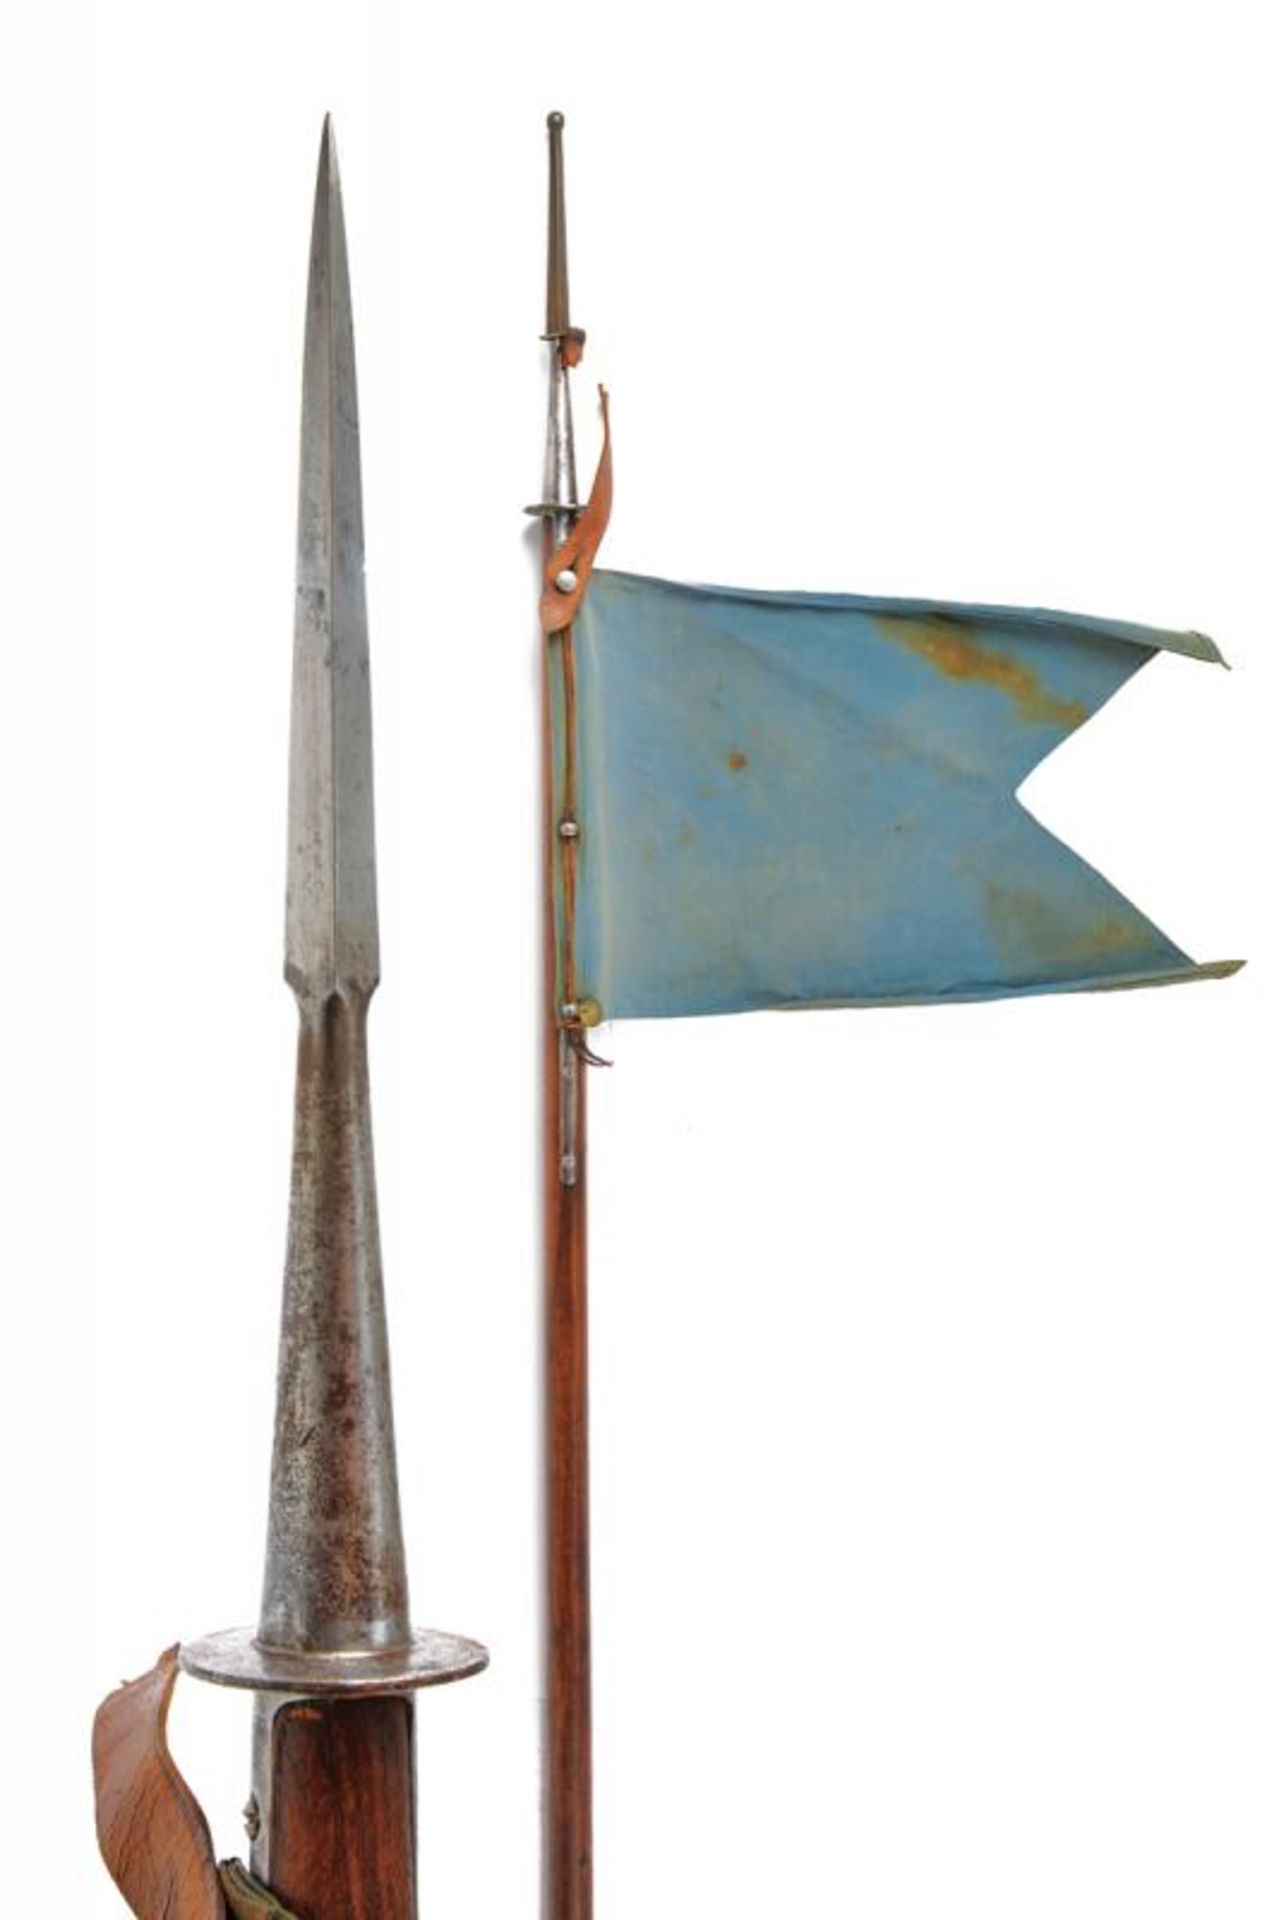 An 1860 model cavalry lance